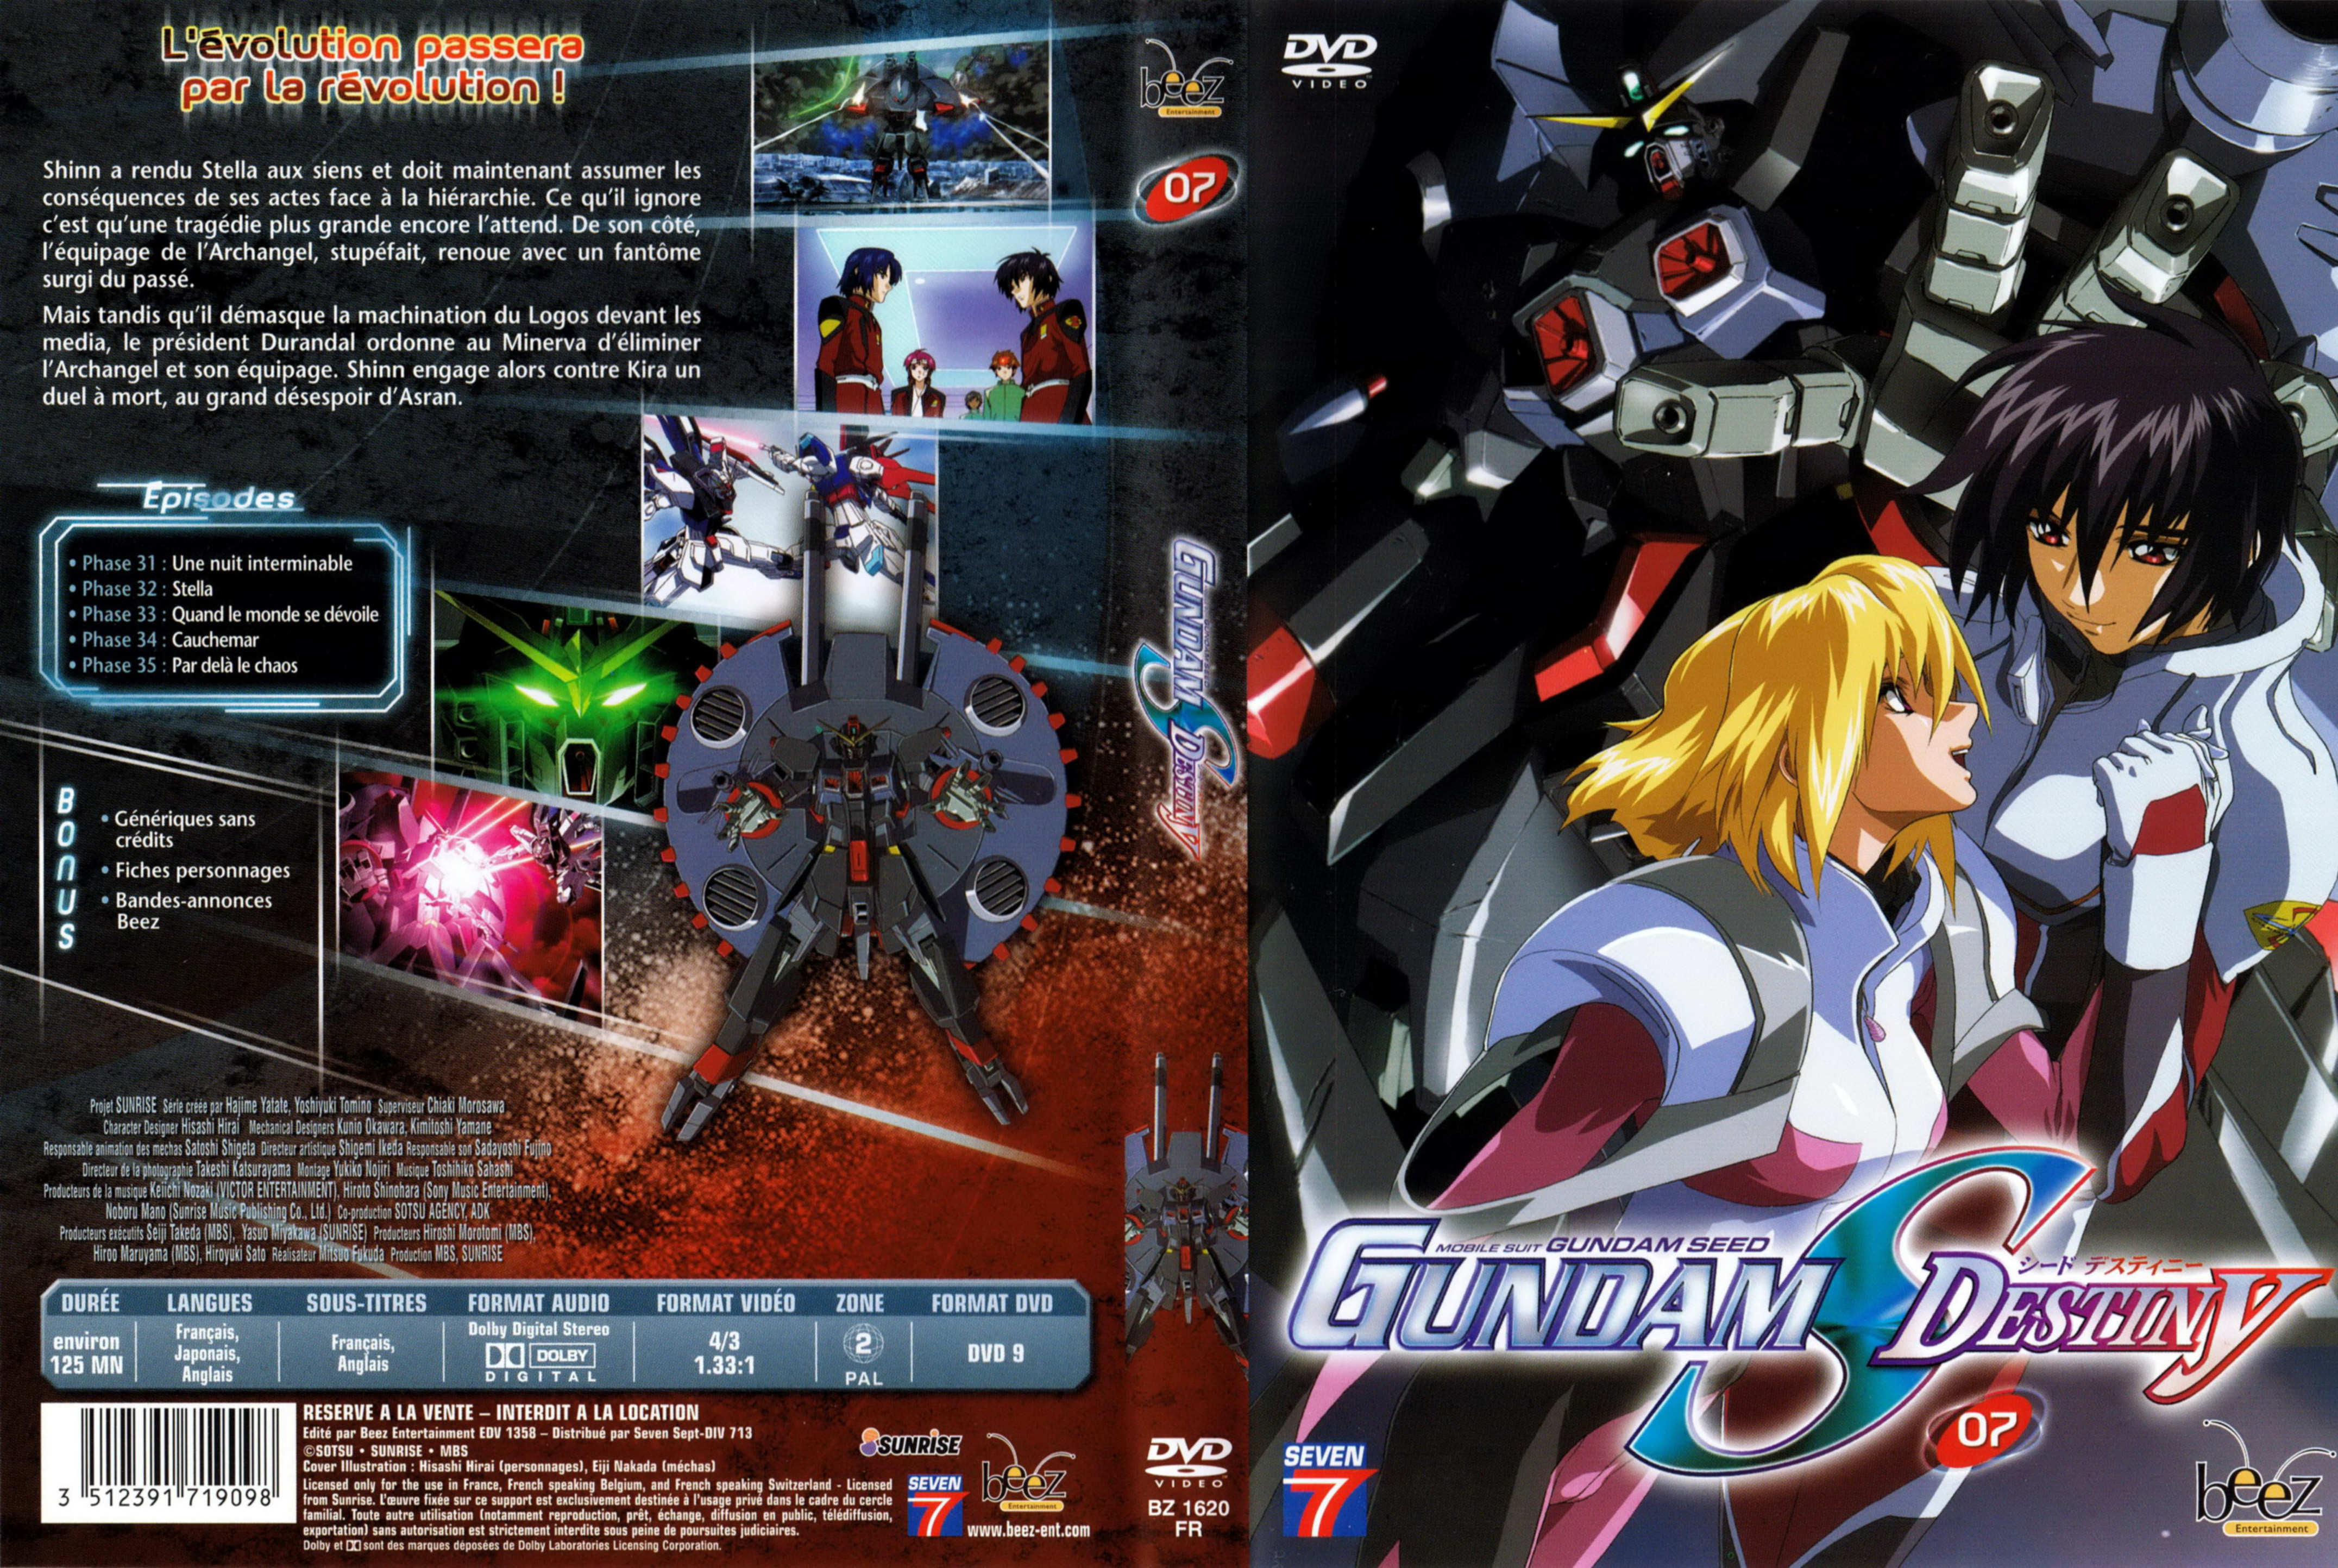 Jaquette DVD Gundam destiny vol 07